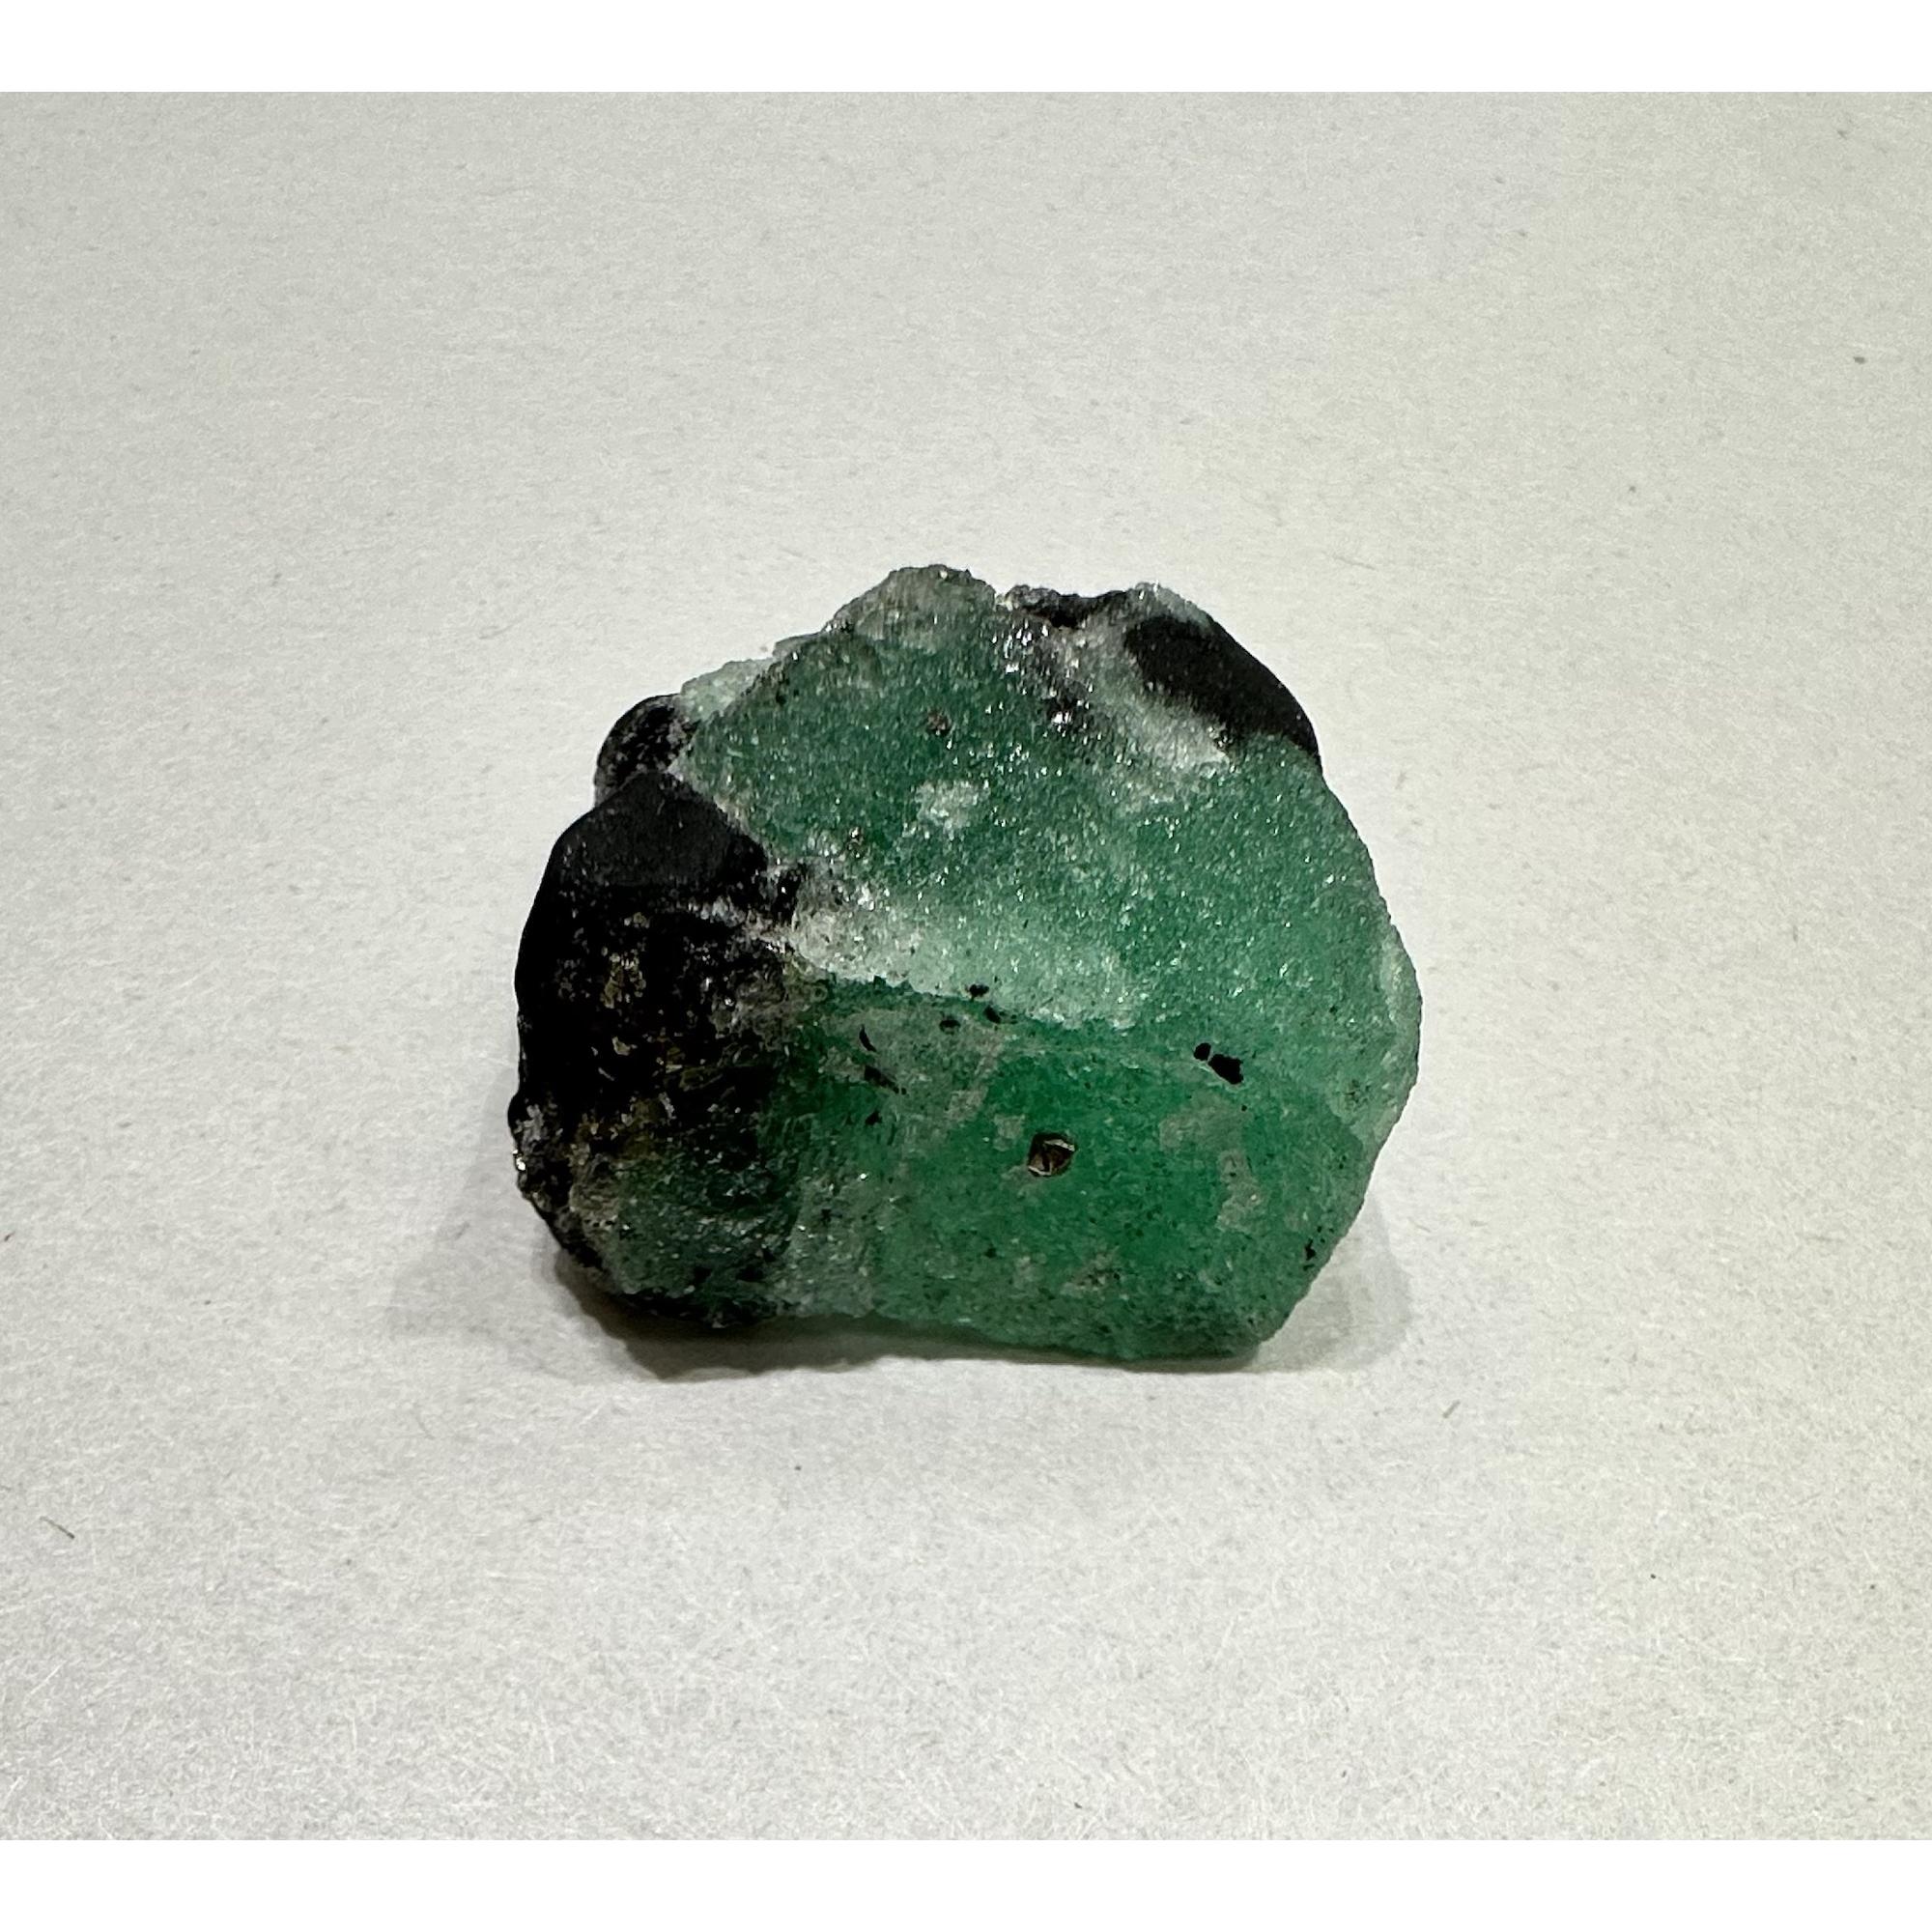 Emerald, Muzo mine Colombia, Natural Prehistoric Online